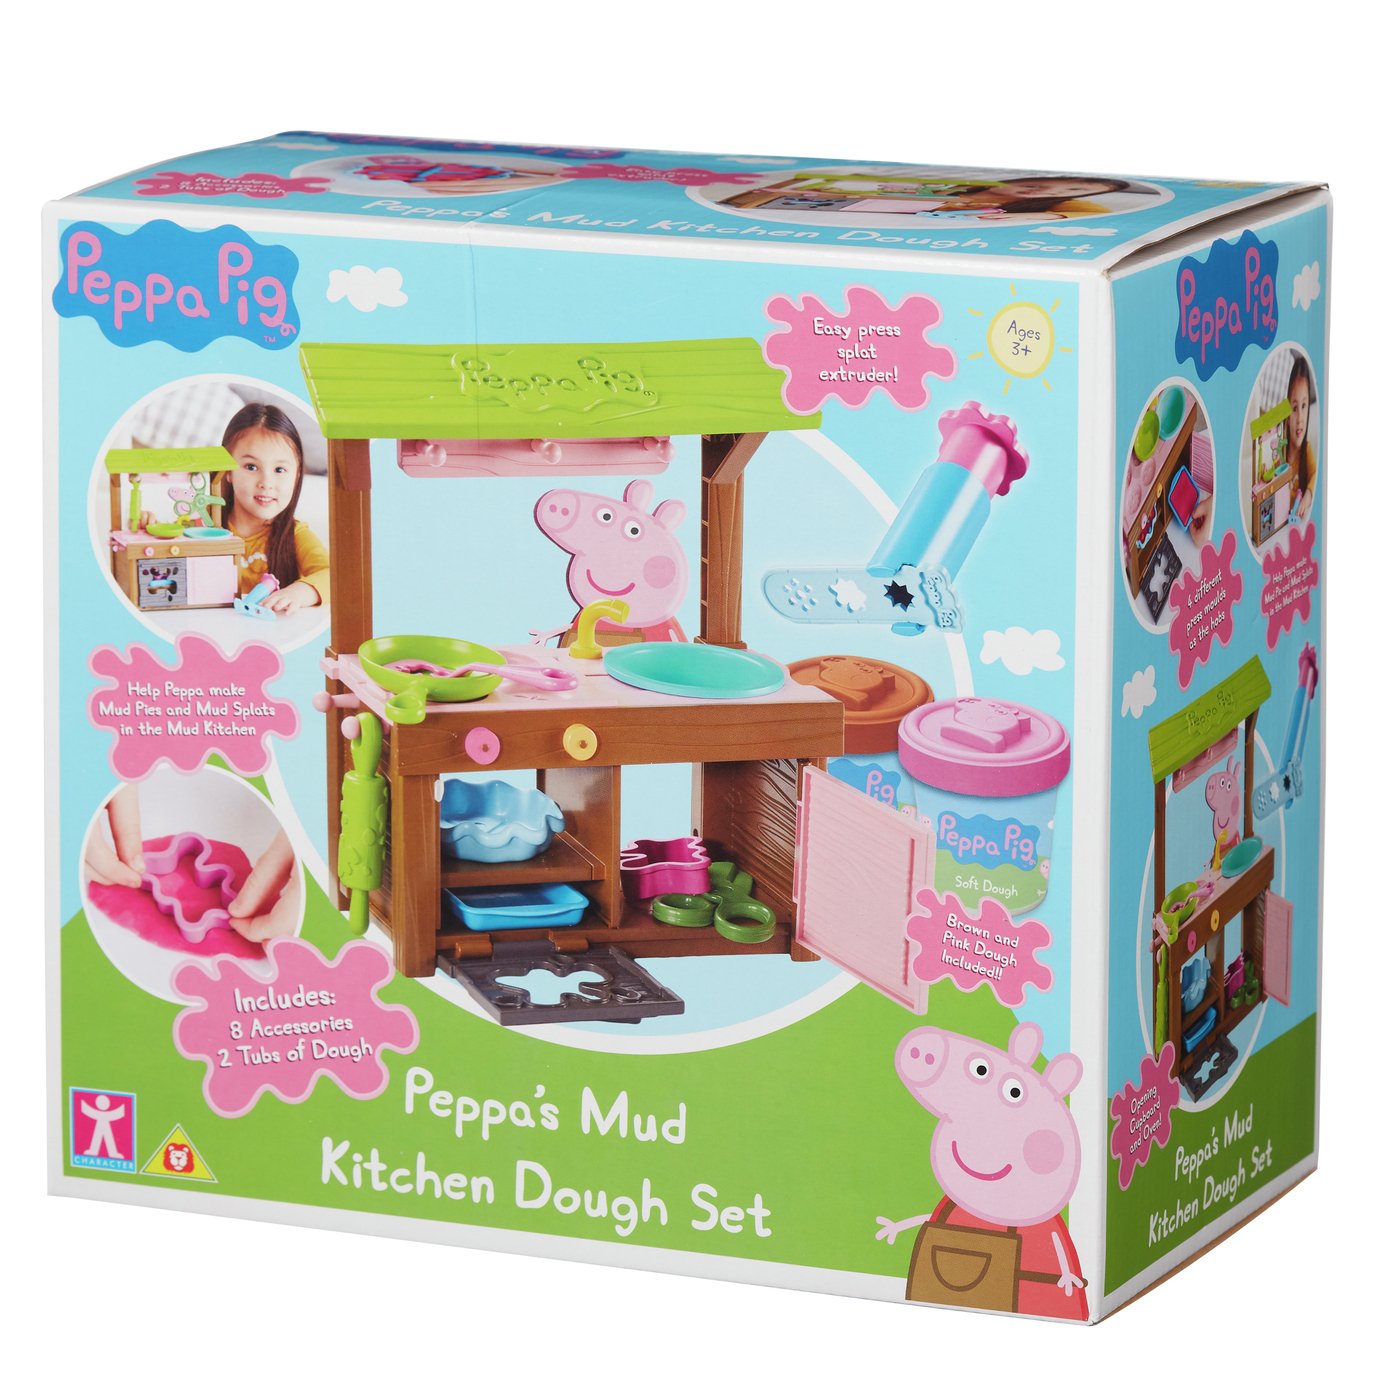 Peppa Mud Kitchen Dough Set Review